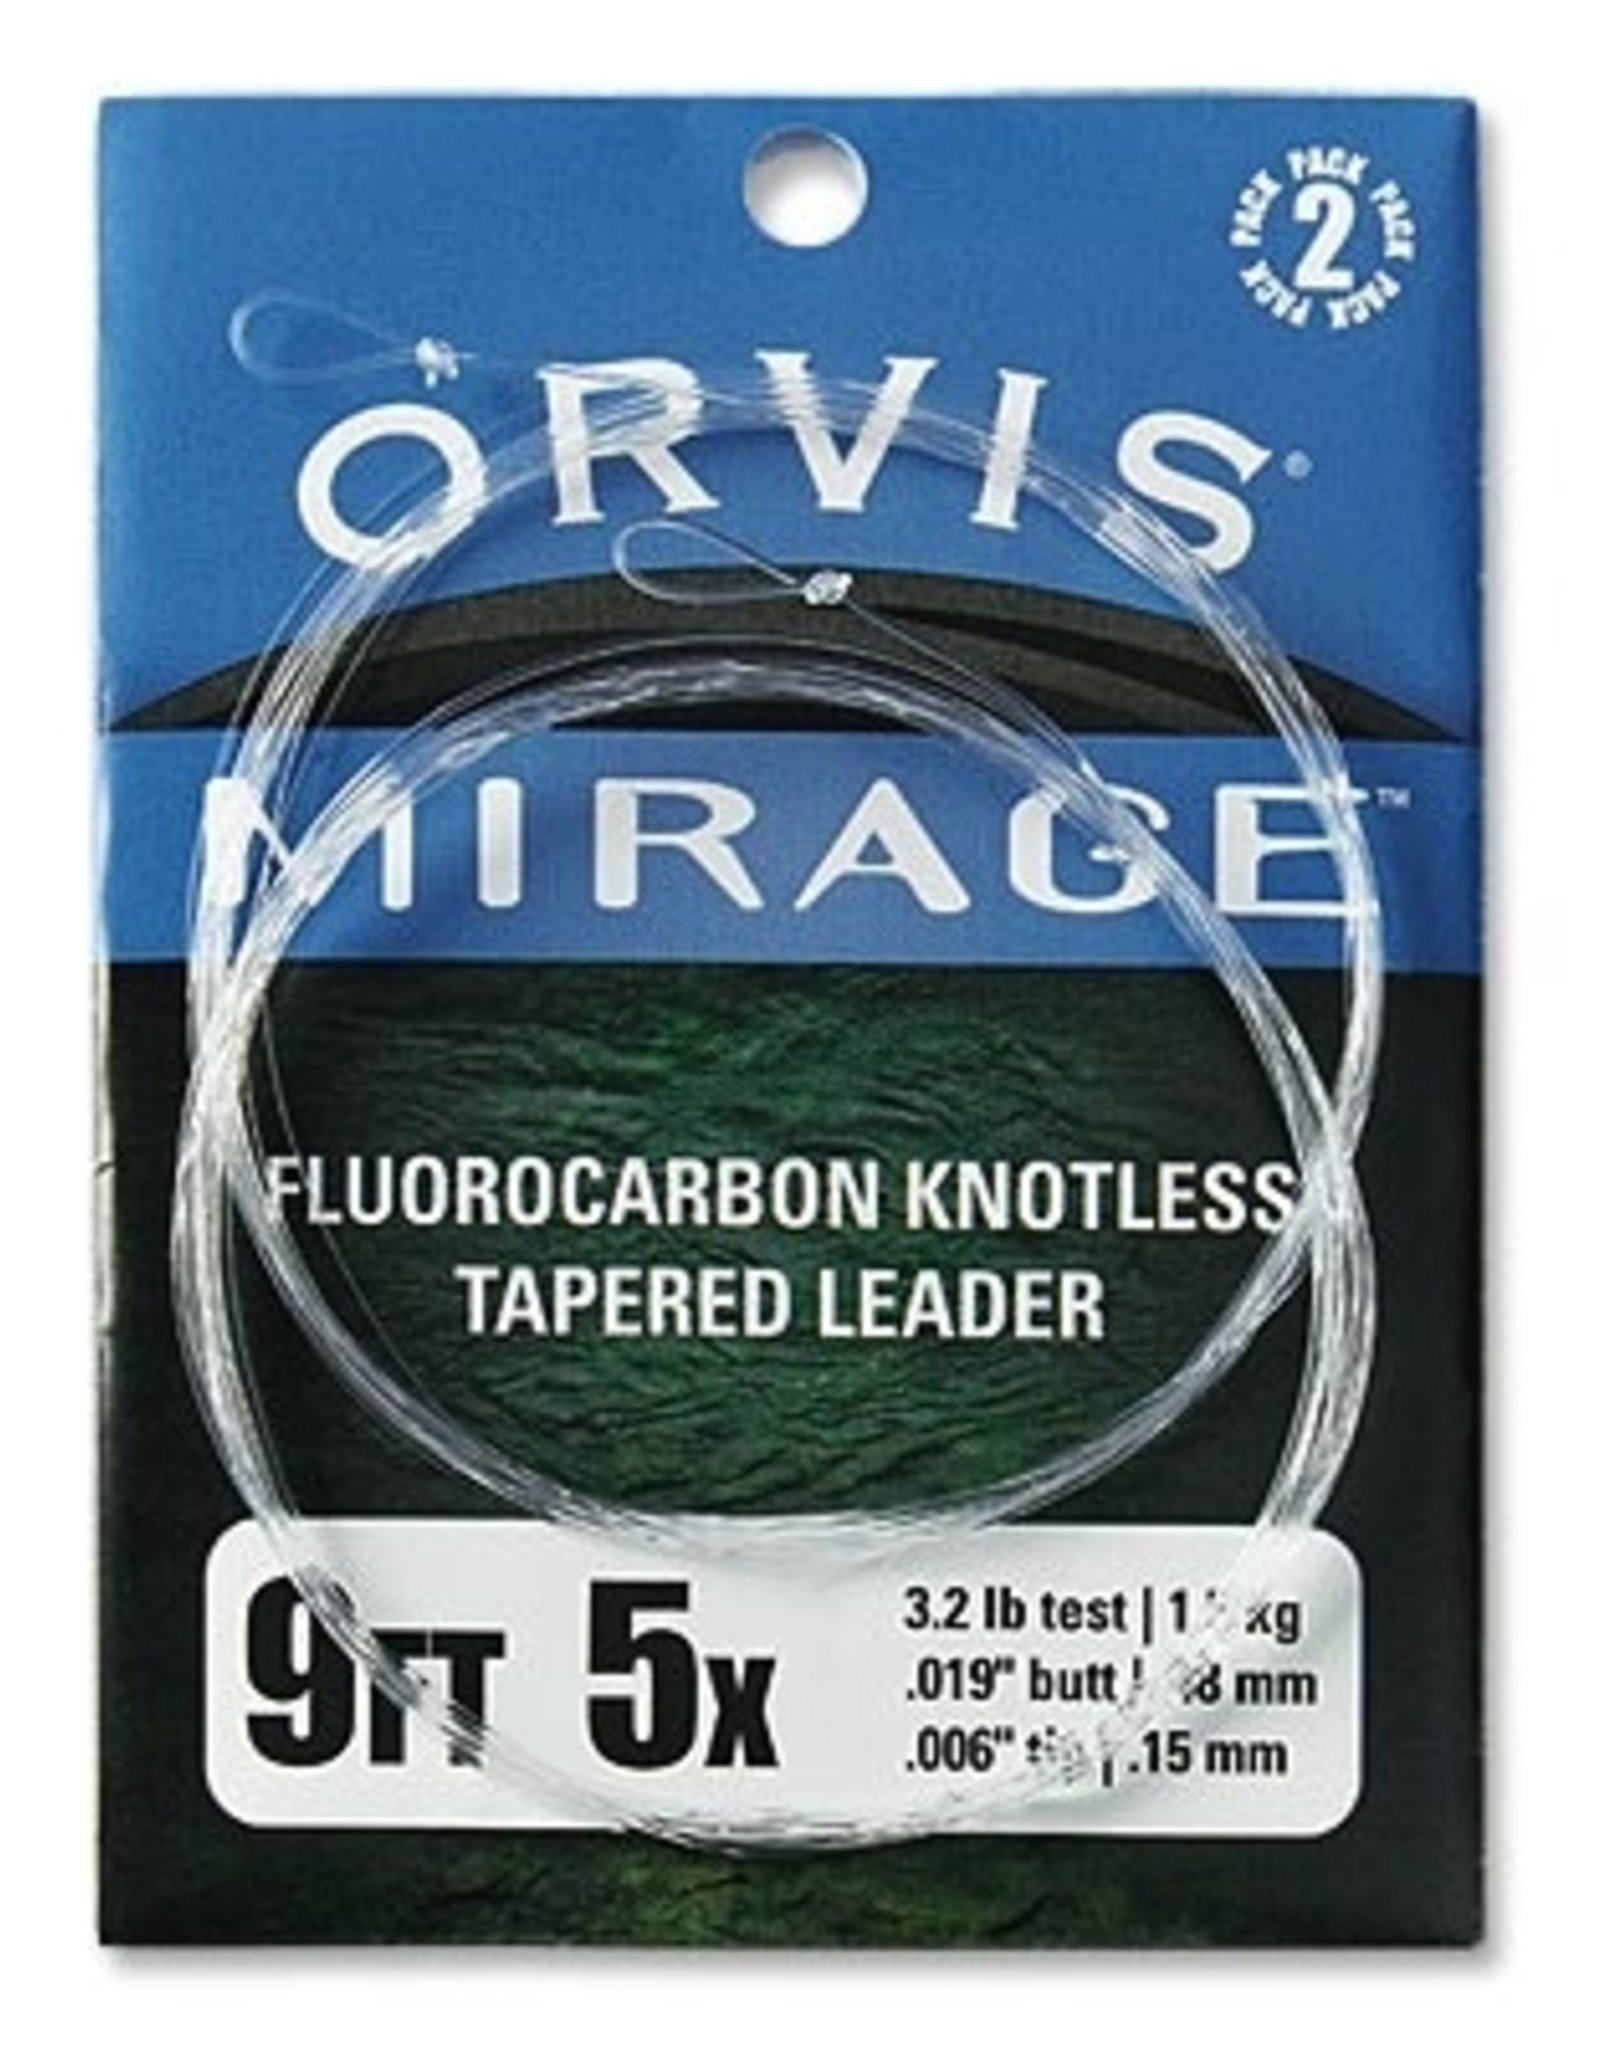 Orvis Orvis Mirage Fluorocarbon Leaders (2 Pack)